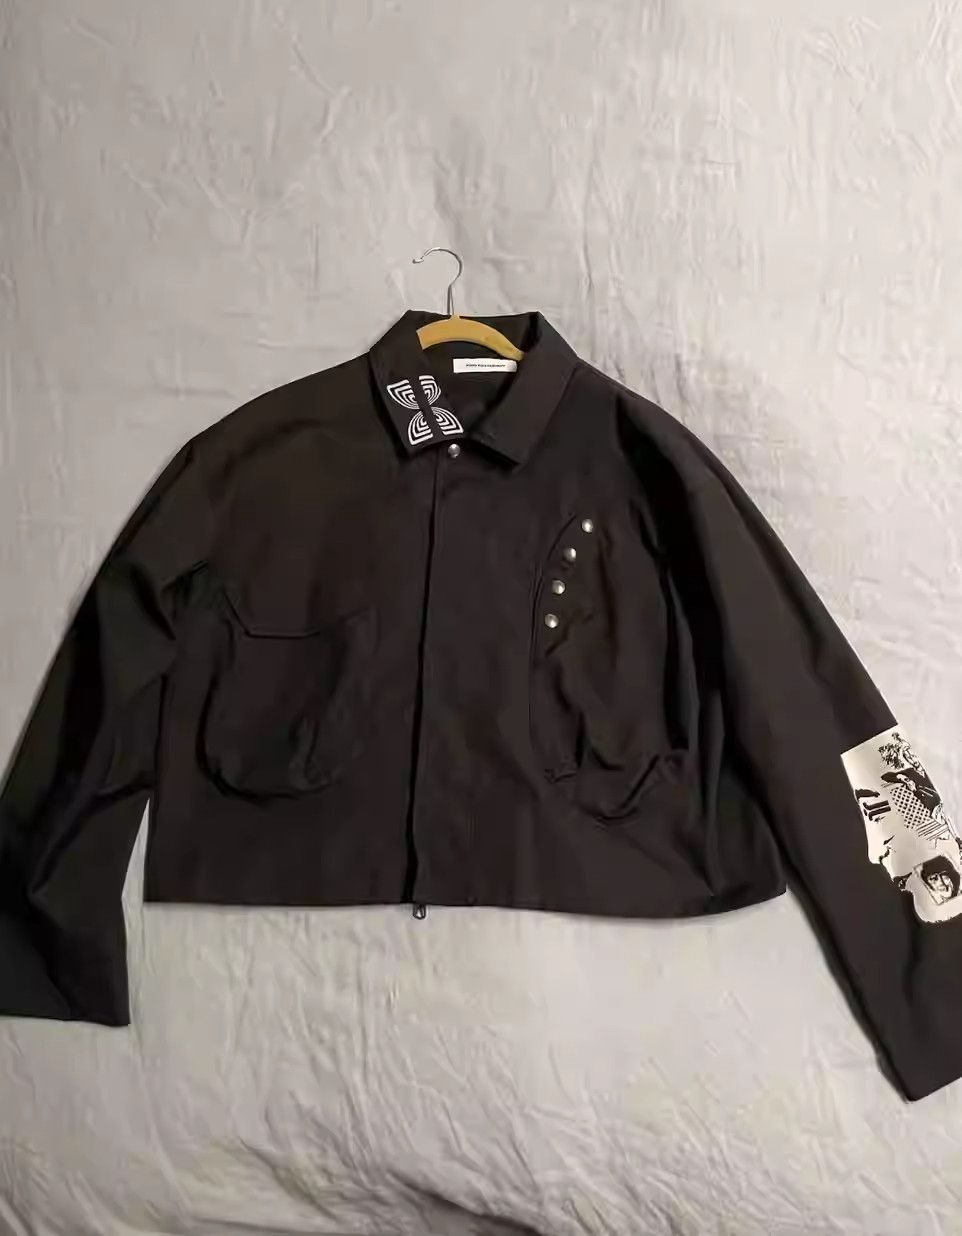 Asics Kobe uniform jacket | Grailed